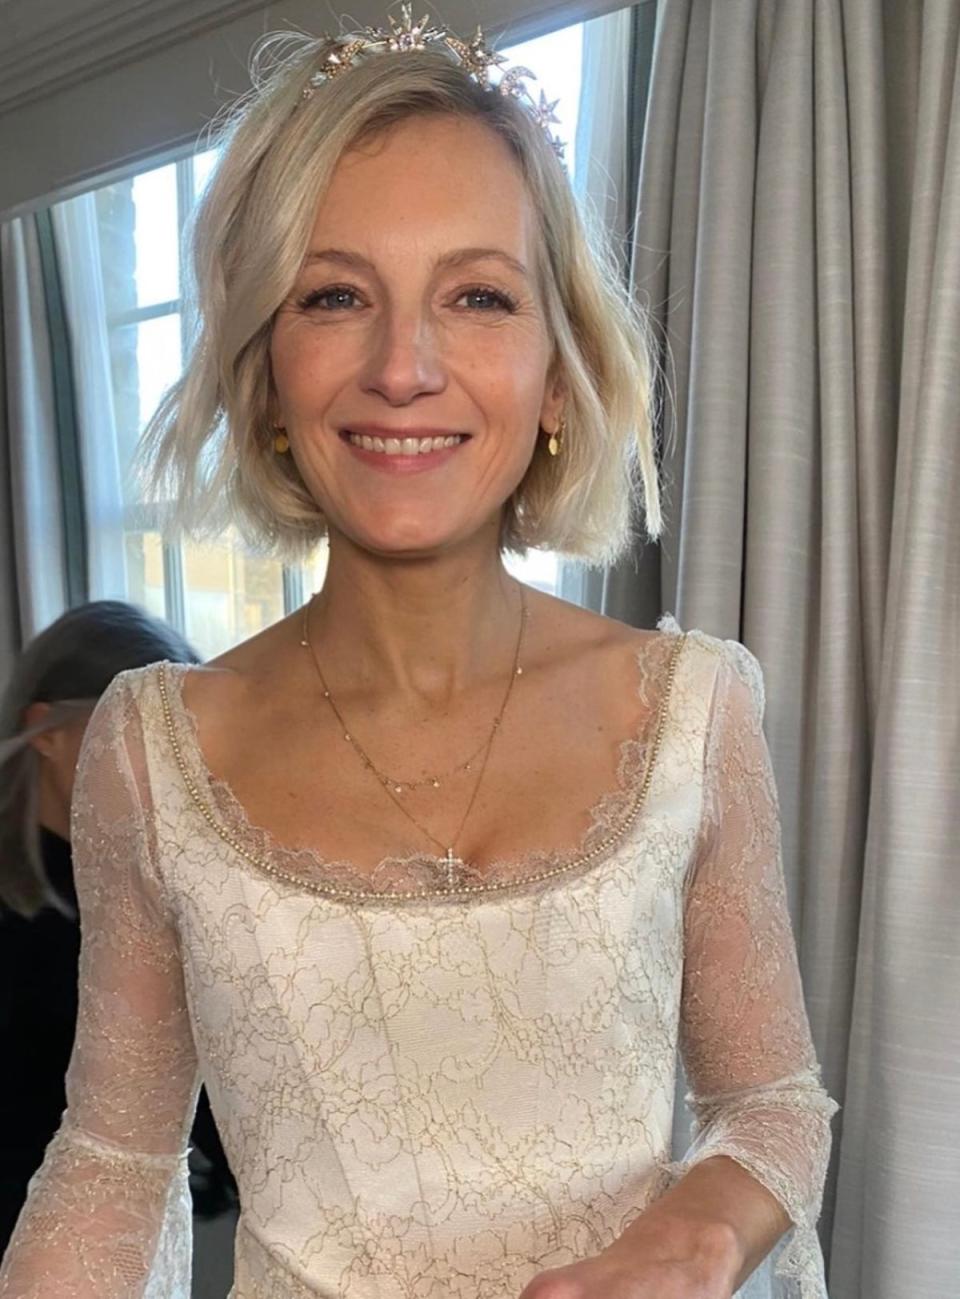 Fashion designer Savannah Miller wore one of her own creations on her wedding day (Wendy Rowe/Instagram)